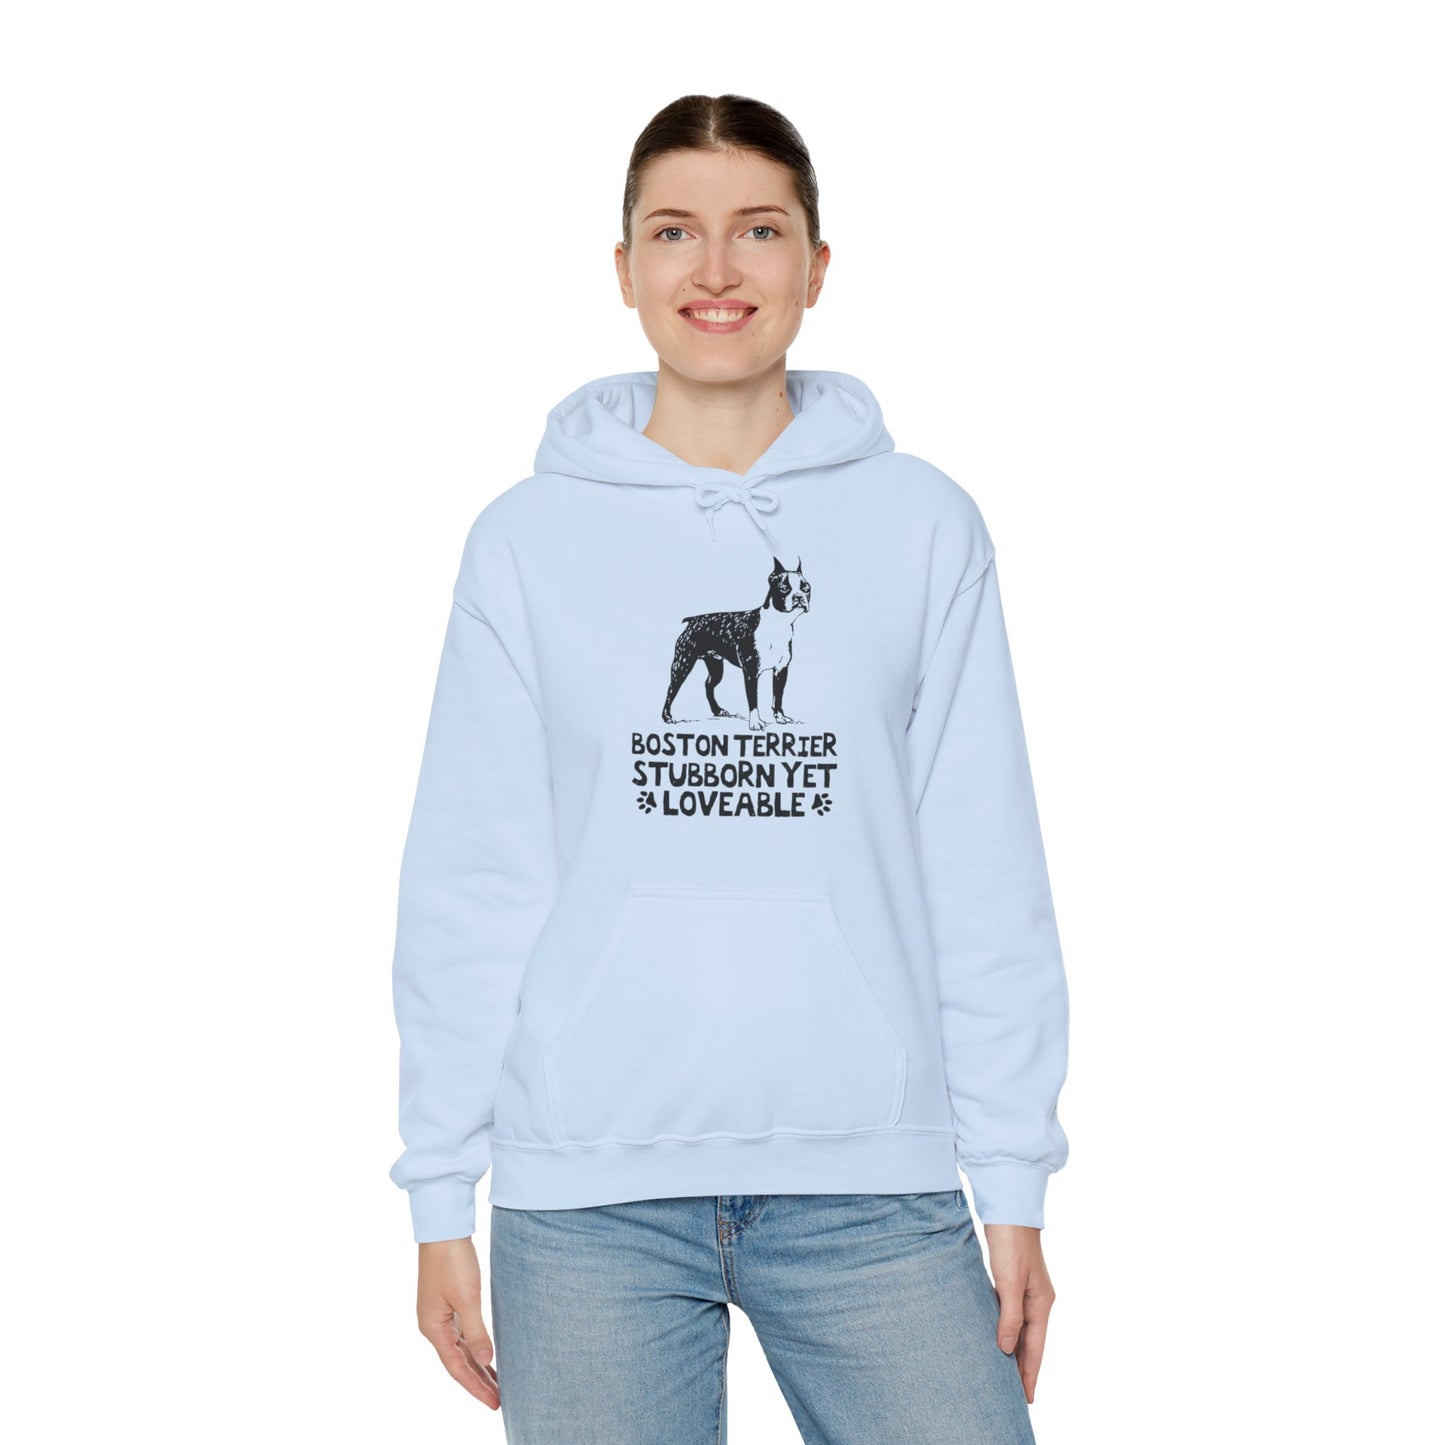 Harlequin - Unisex Hoodie for Boston Terrier lovers